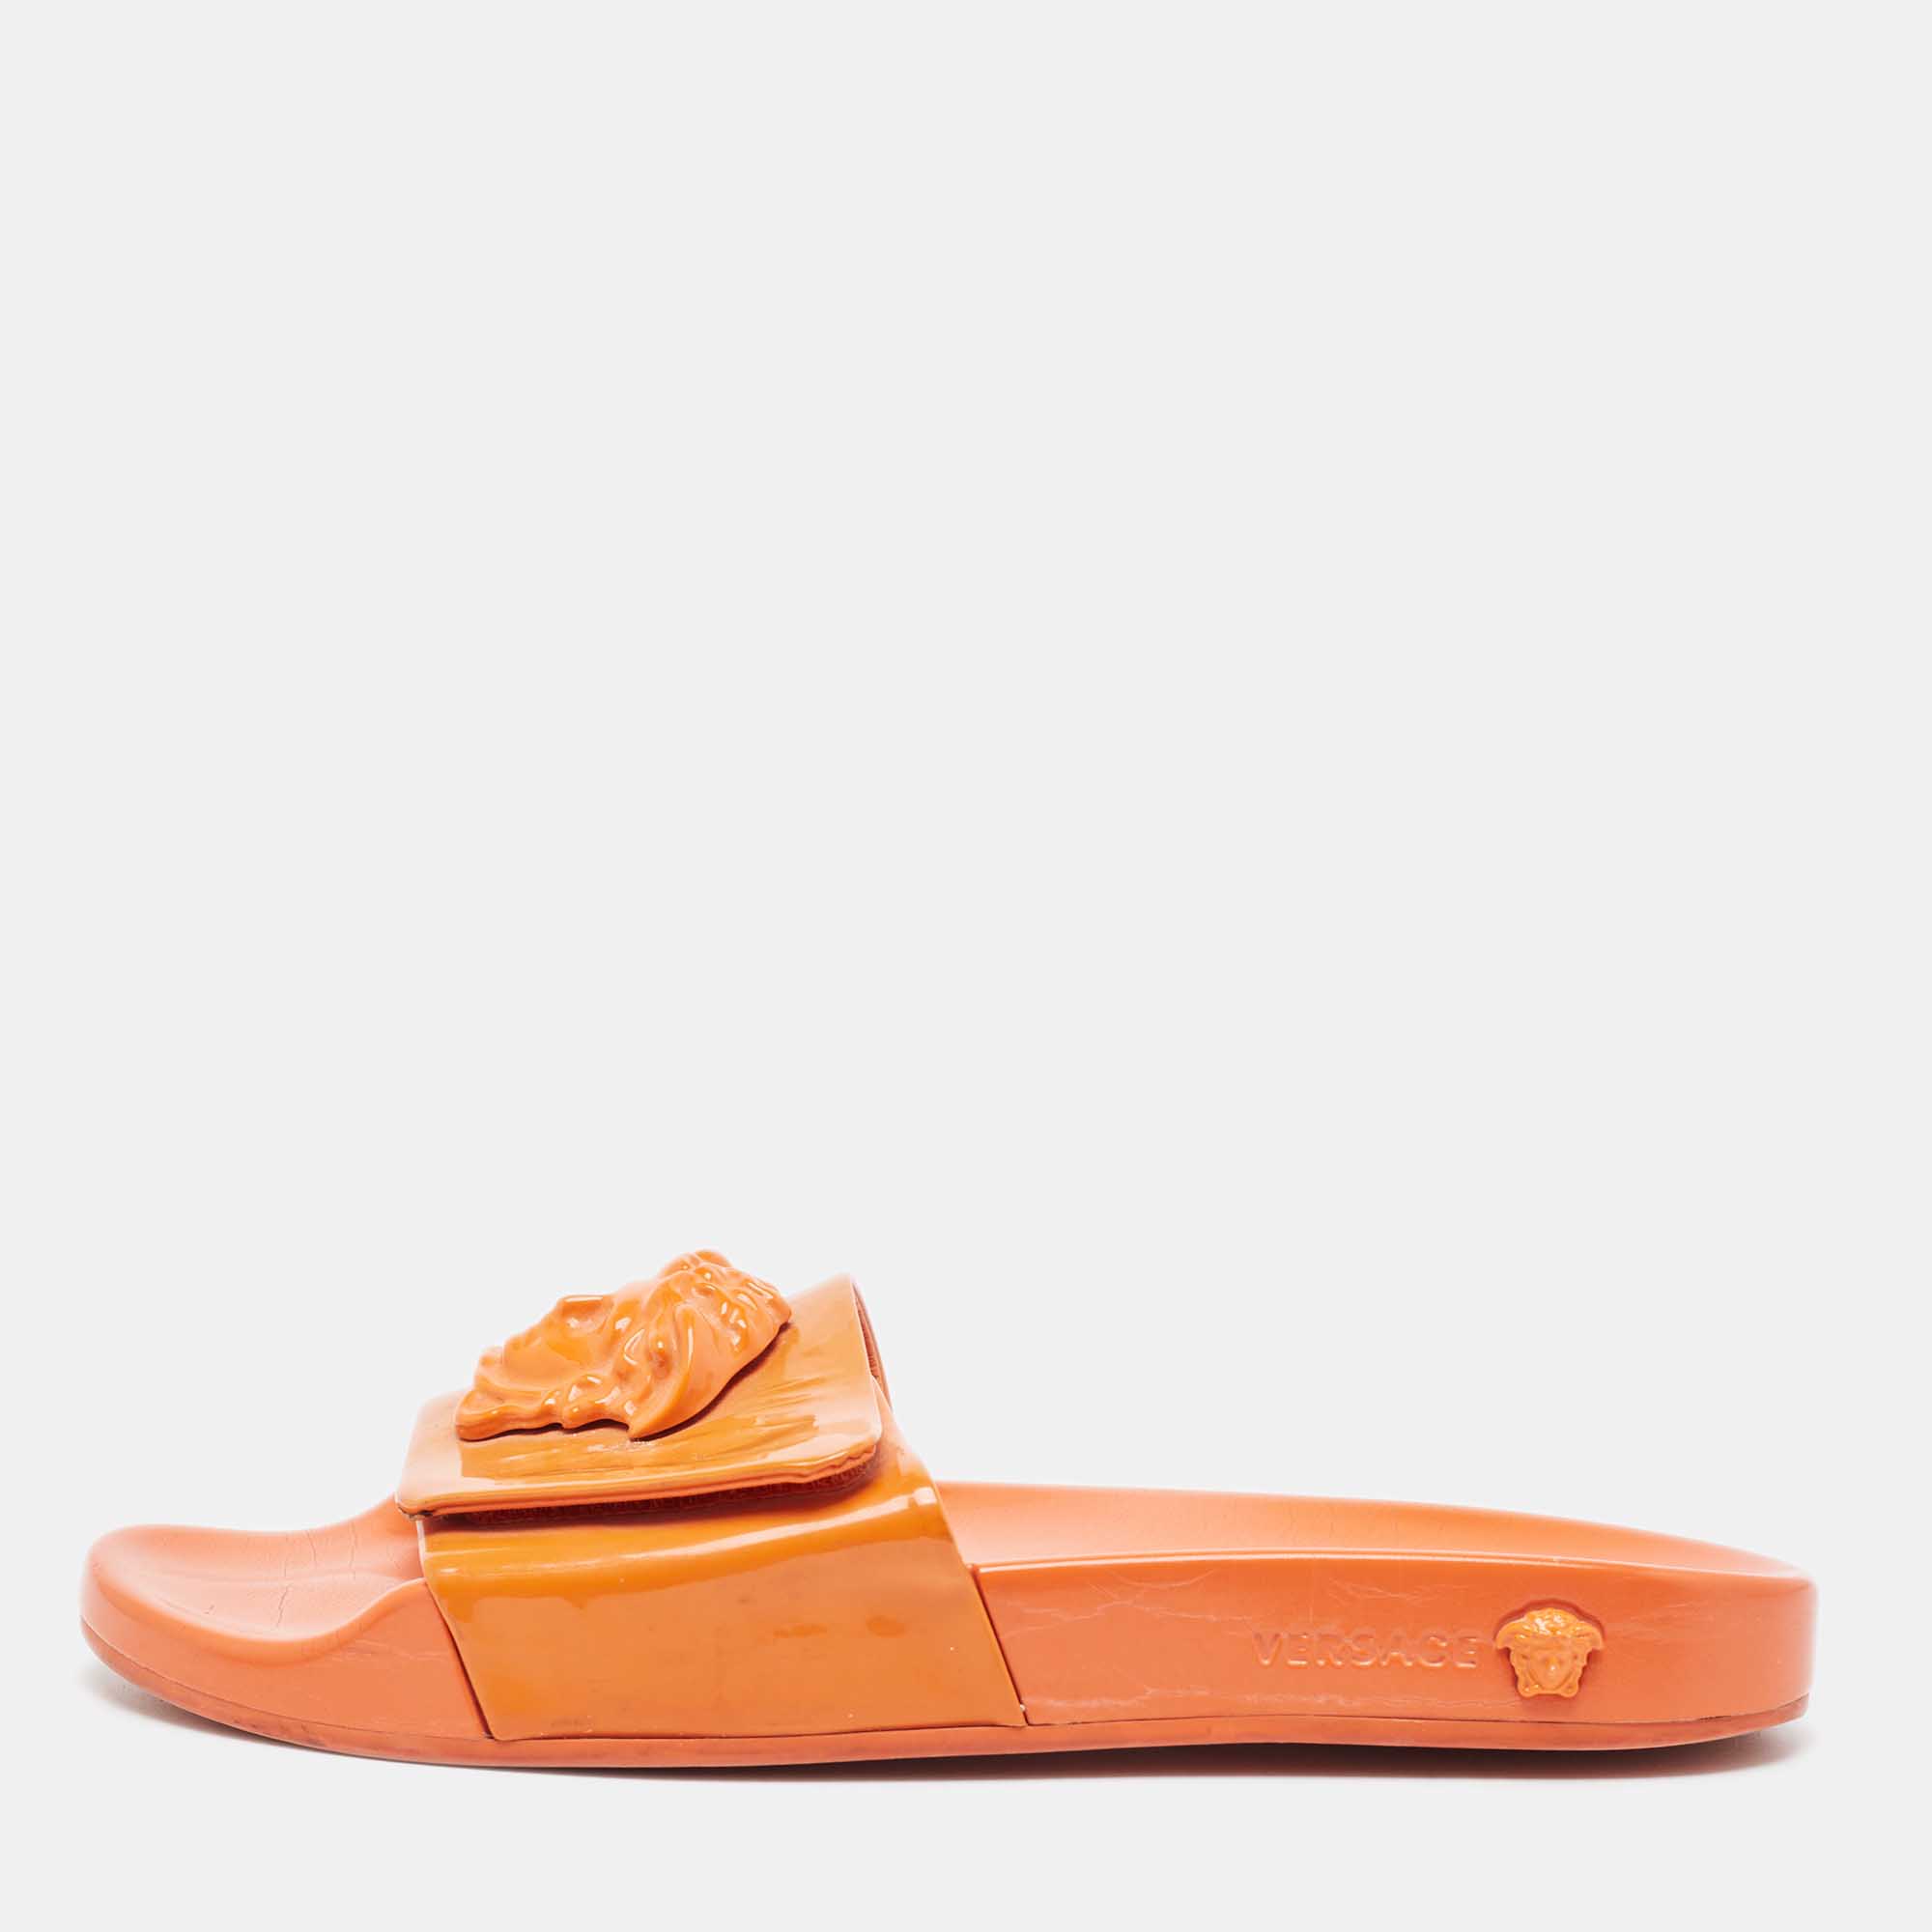 Pre-owned Versace Orange Patent Leather Medusa Flat Slides Size 41